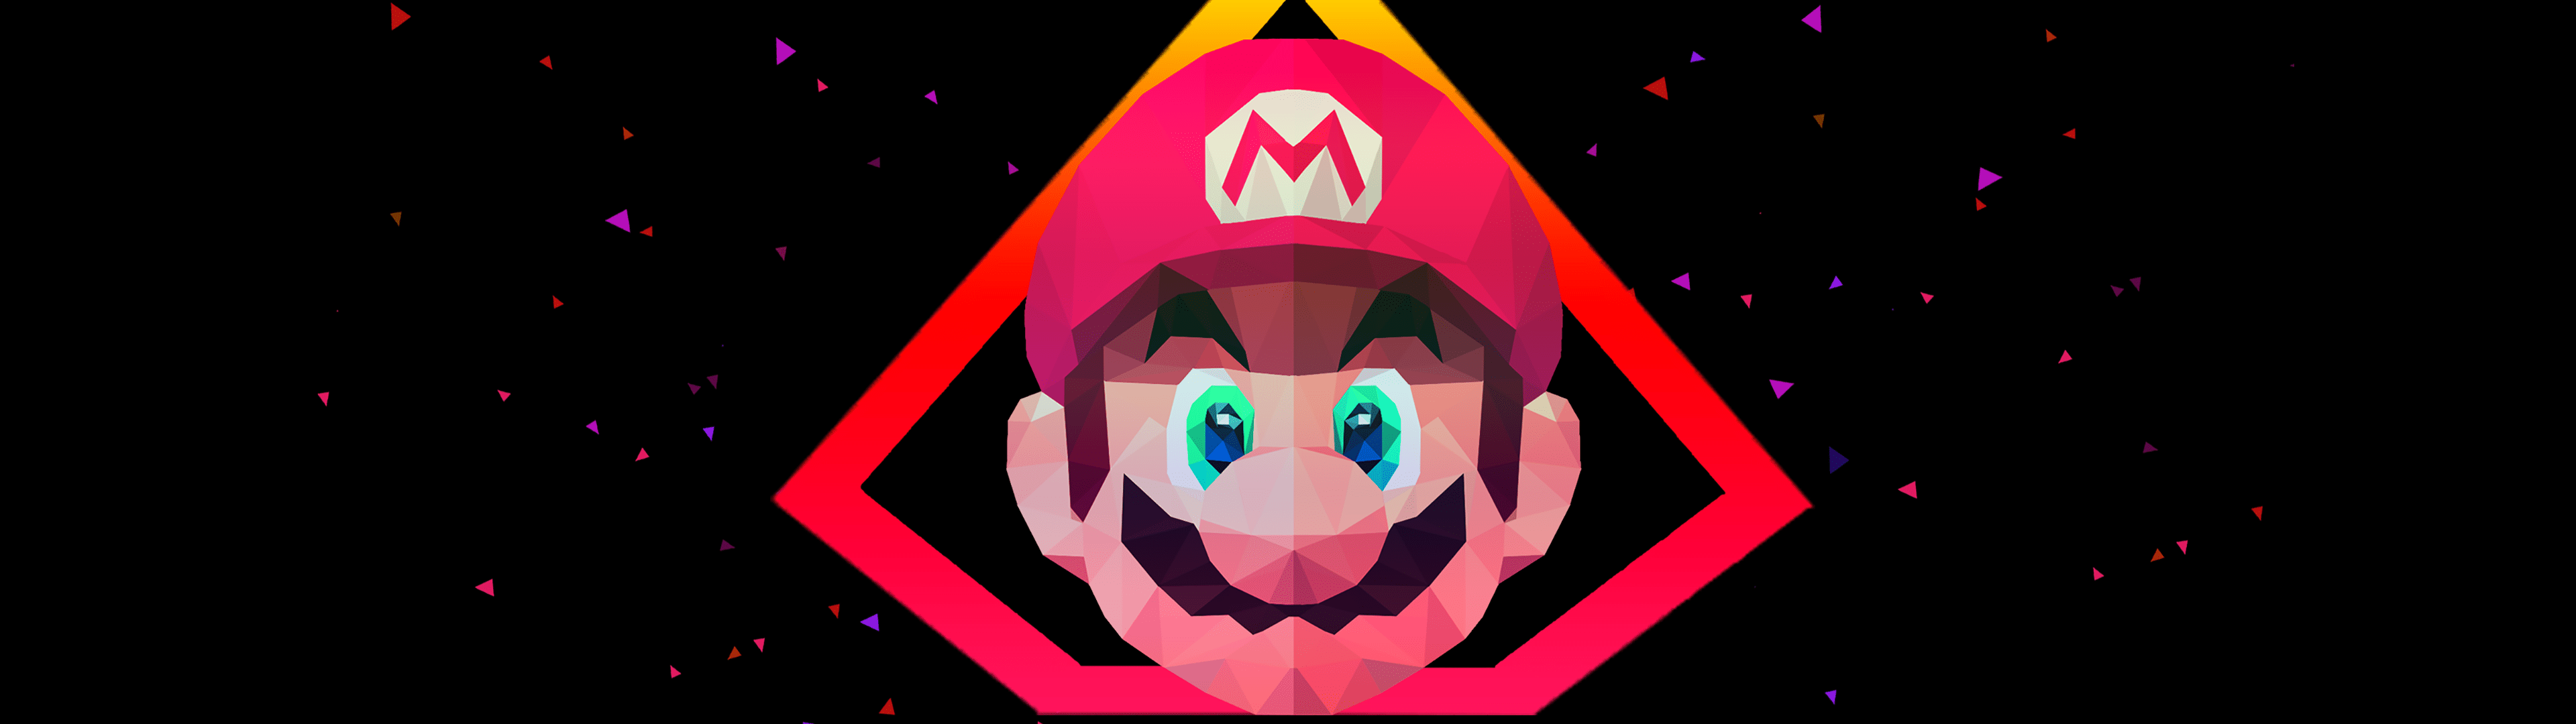 Super Mario Wallpaper 4K, AMOLED, Low poly, Graphics CGI